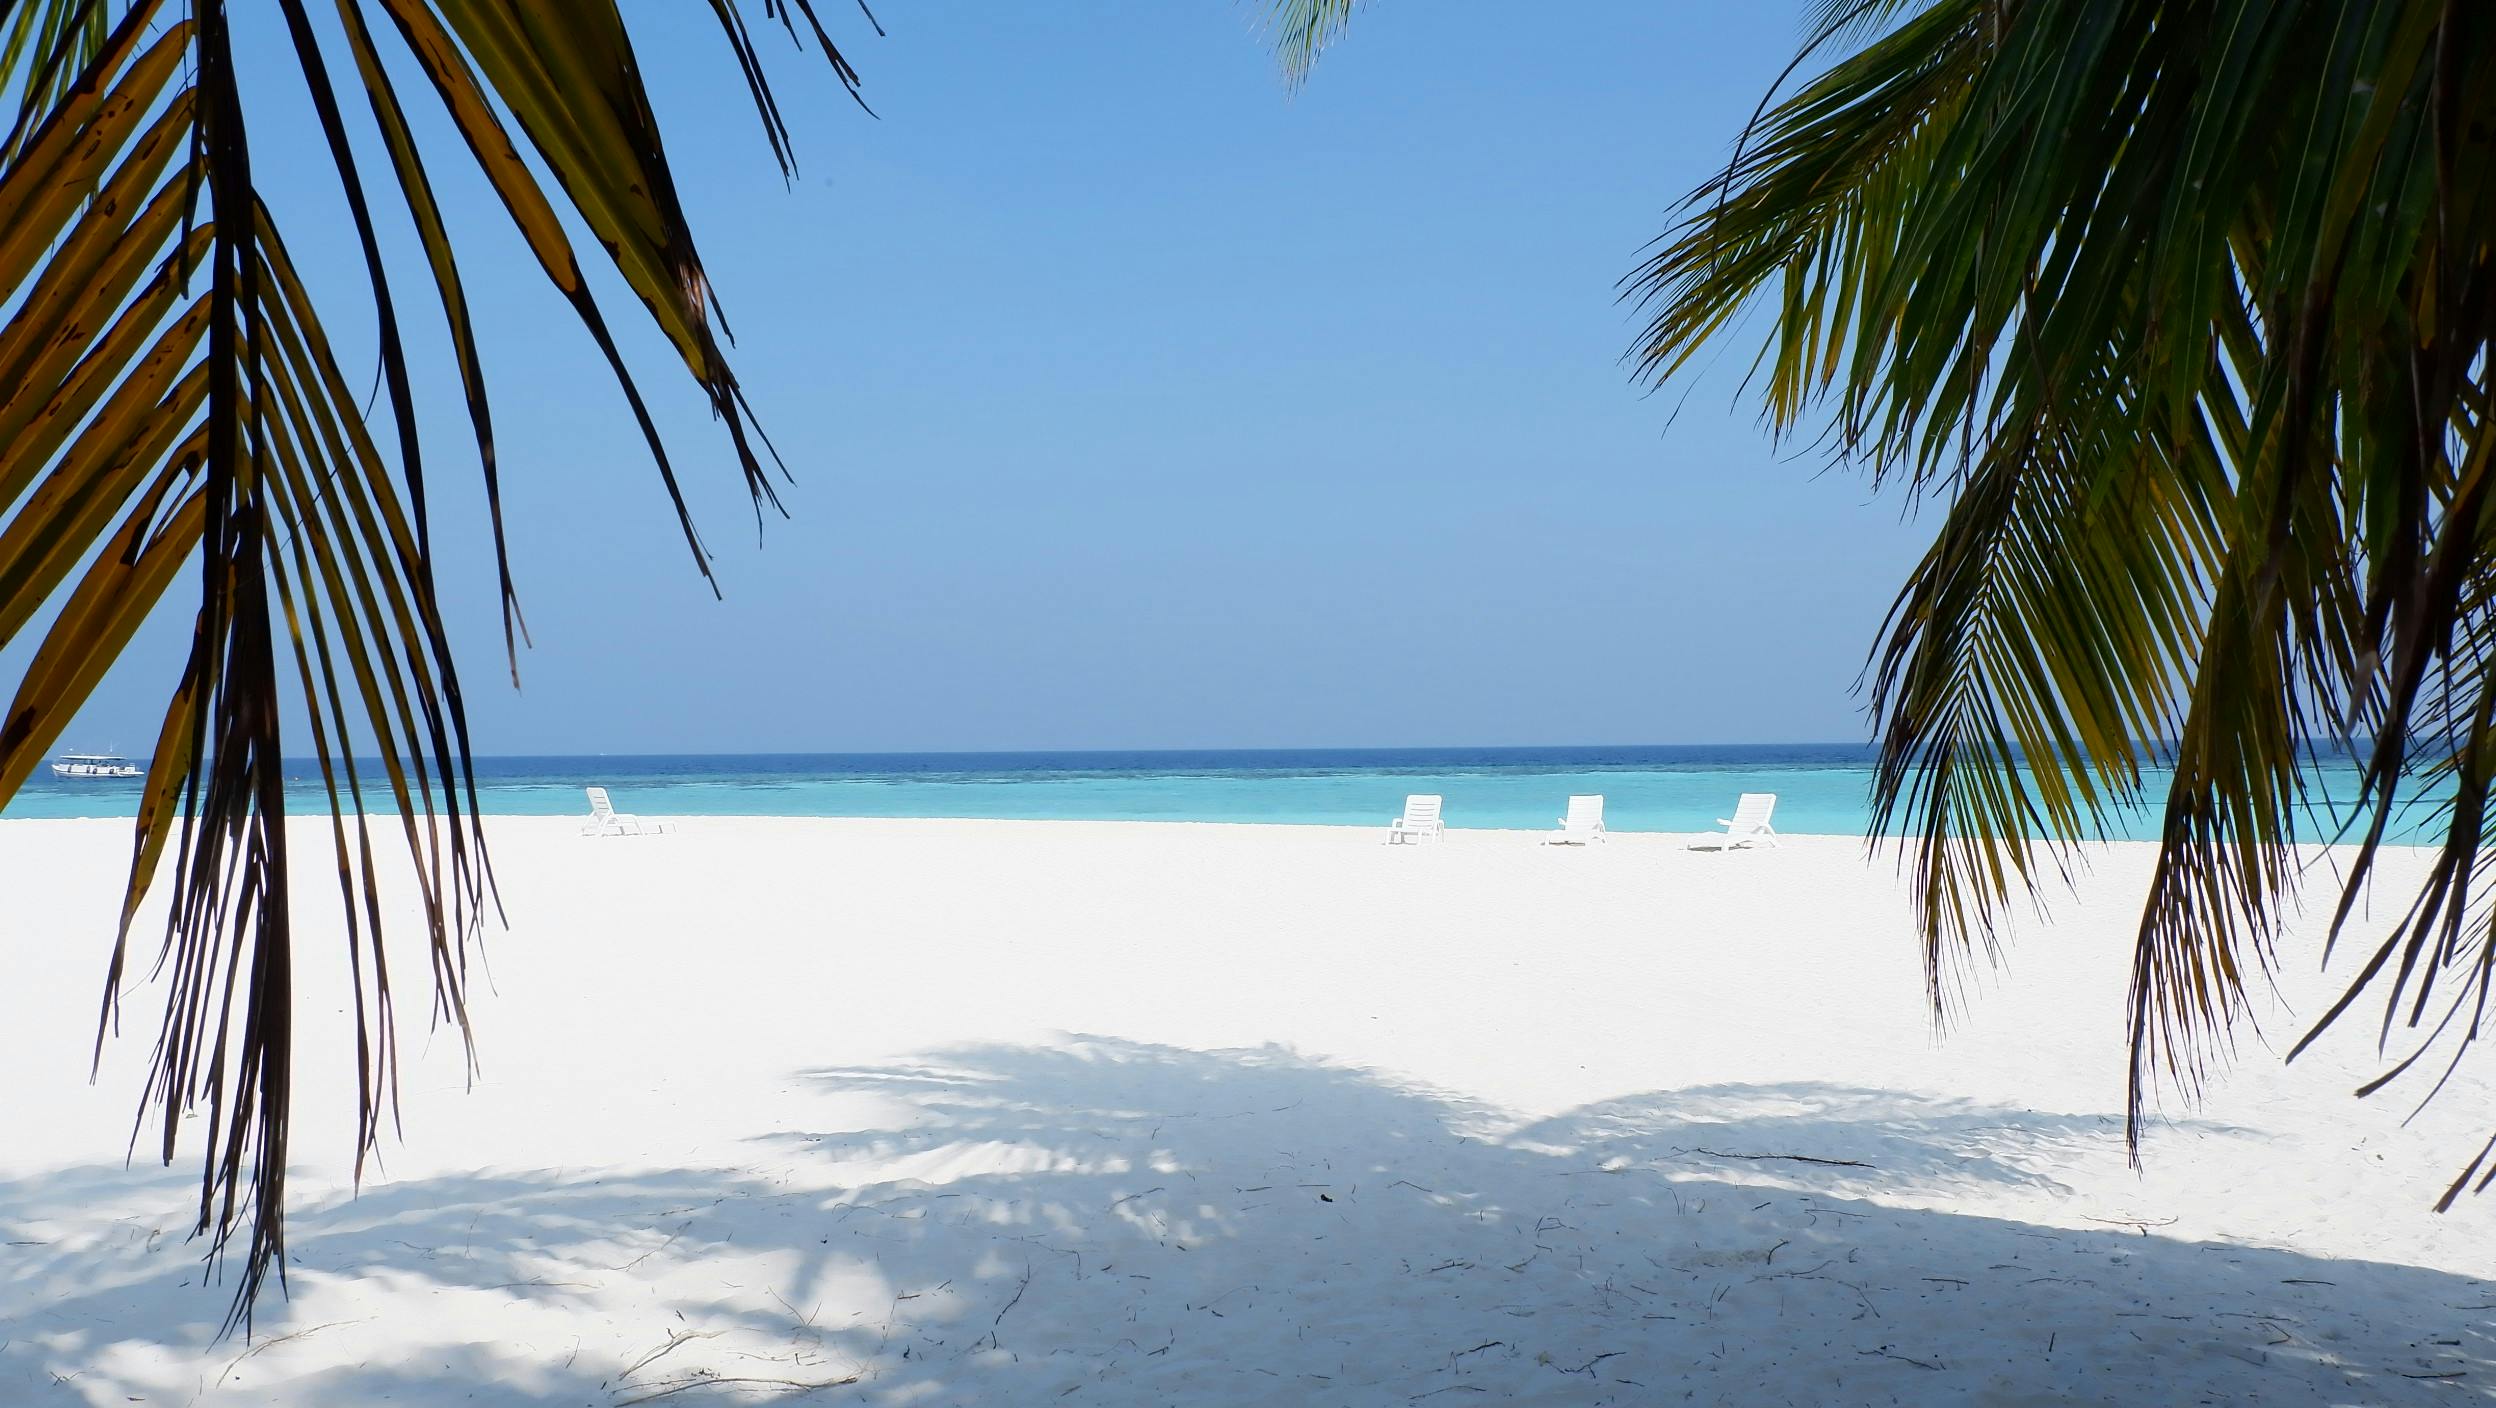 Free stock photo of maldives, thulhagiri island resort